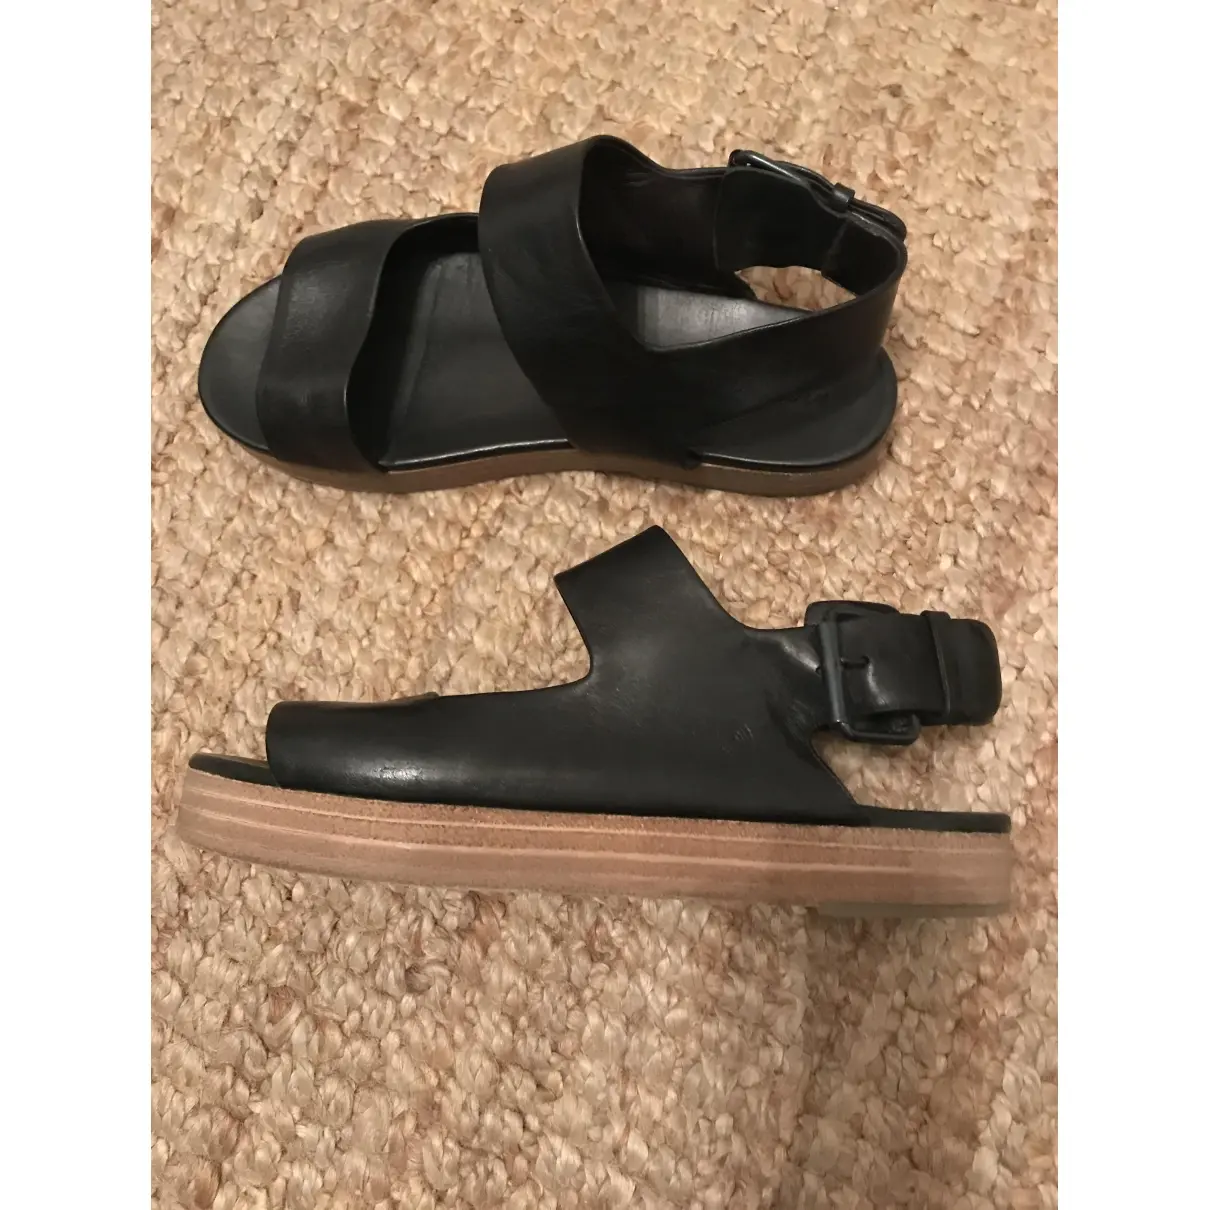 Buy Marsèll Leather sandal online